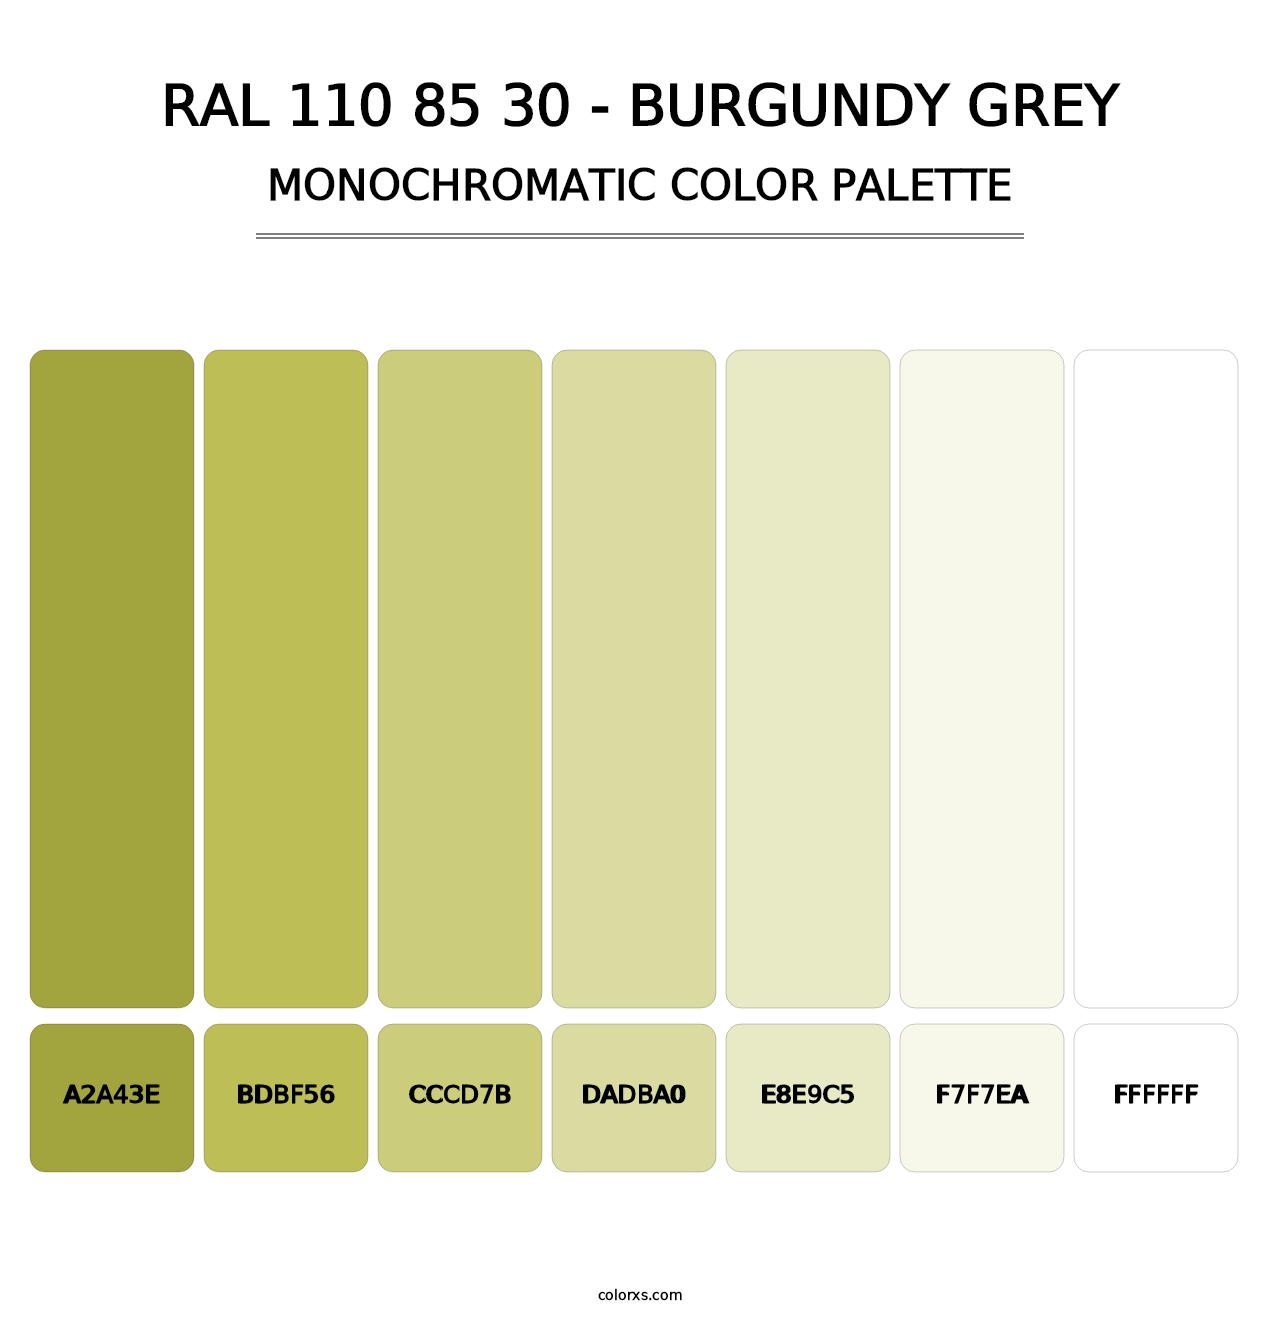 RAL 110 85 30 - Burgundy Grey - Monochromatic Color Palette